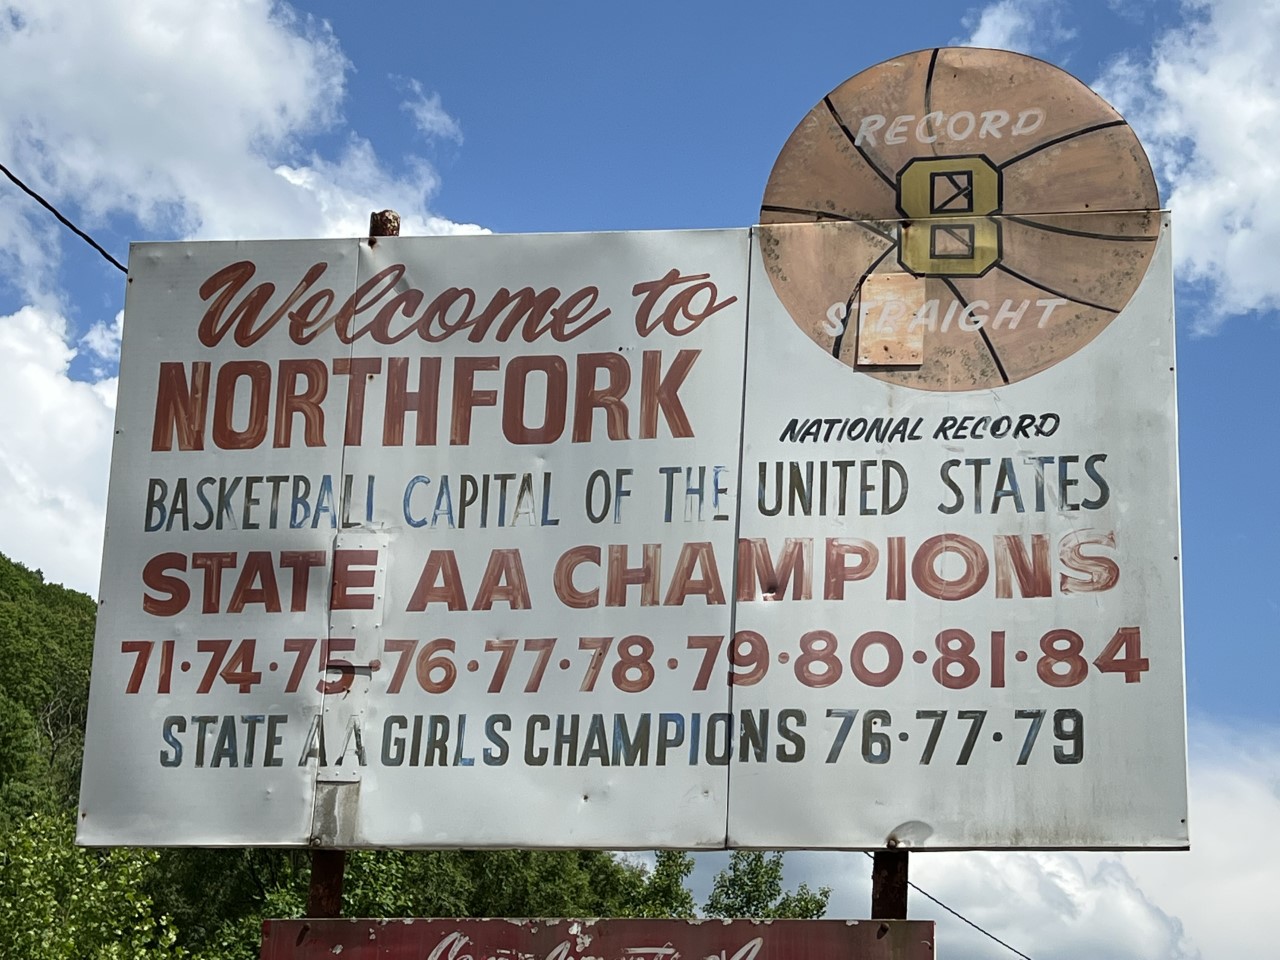 Nearly half a century later, Northfork's rich basketball history not forgotten - West Virginia MetroNews